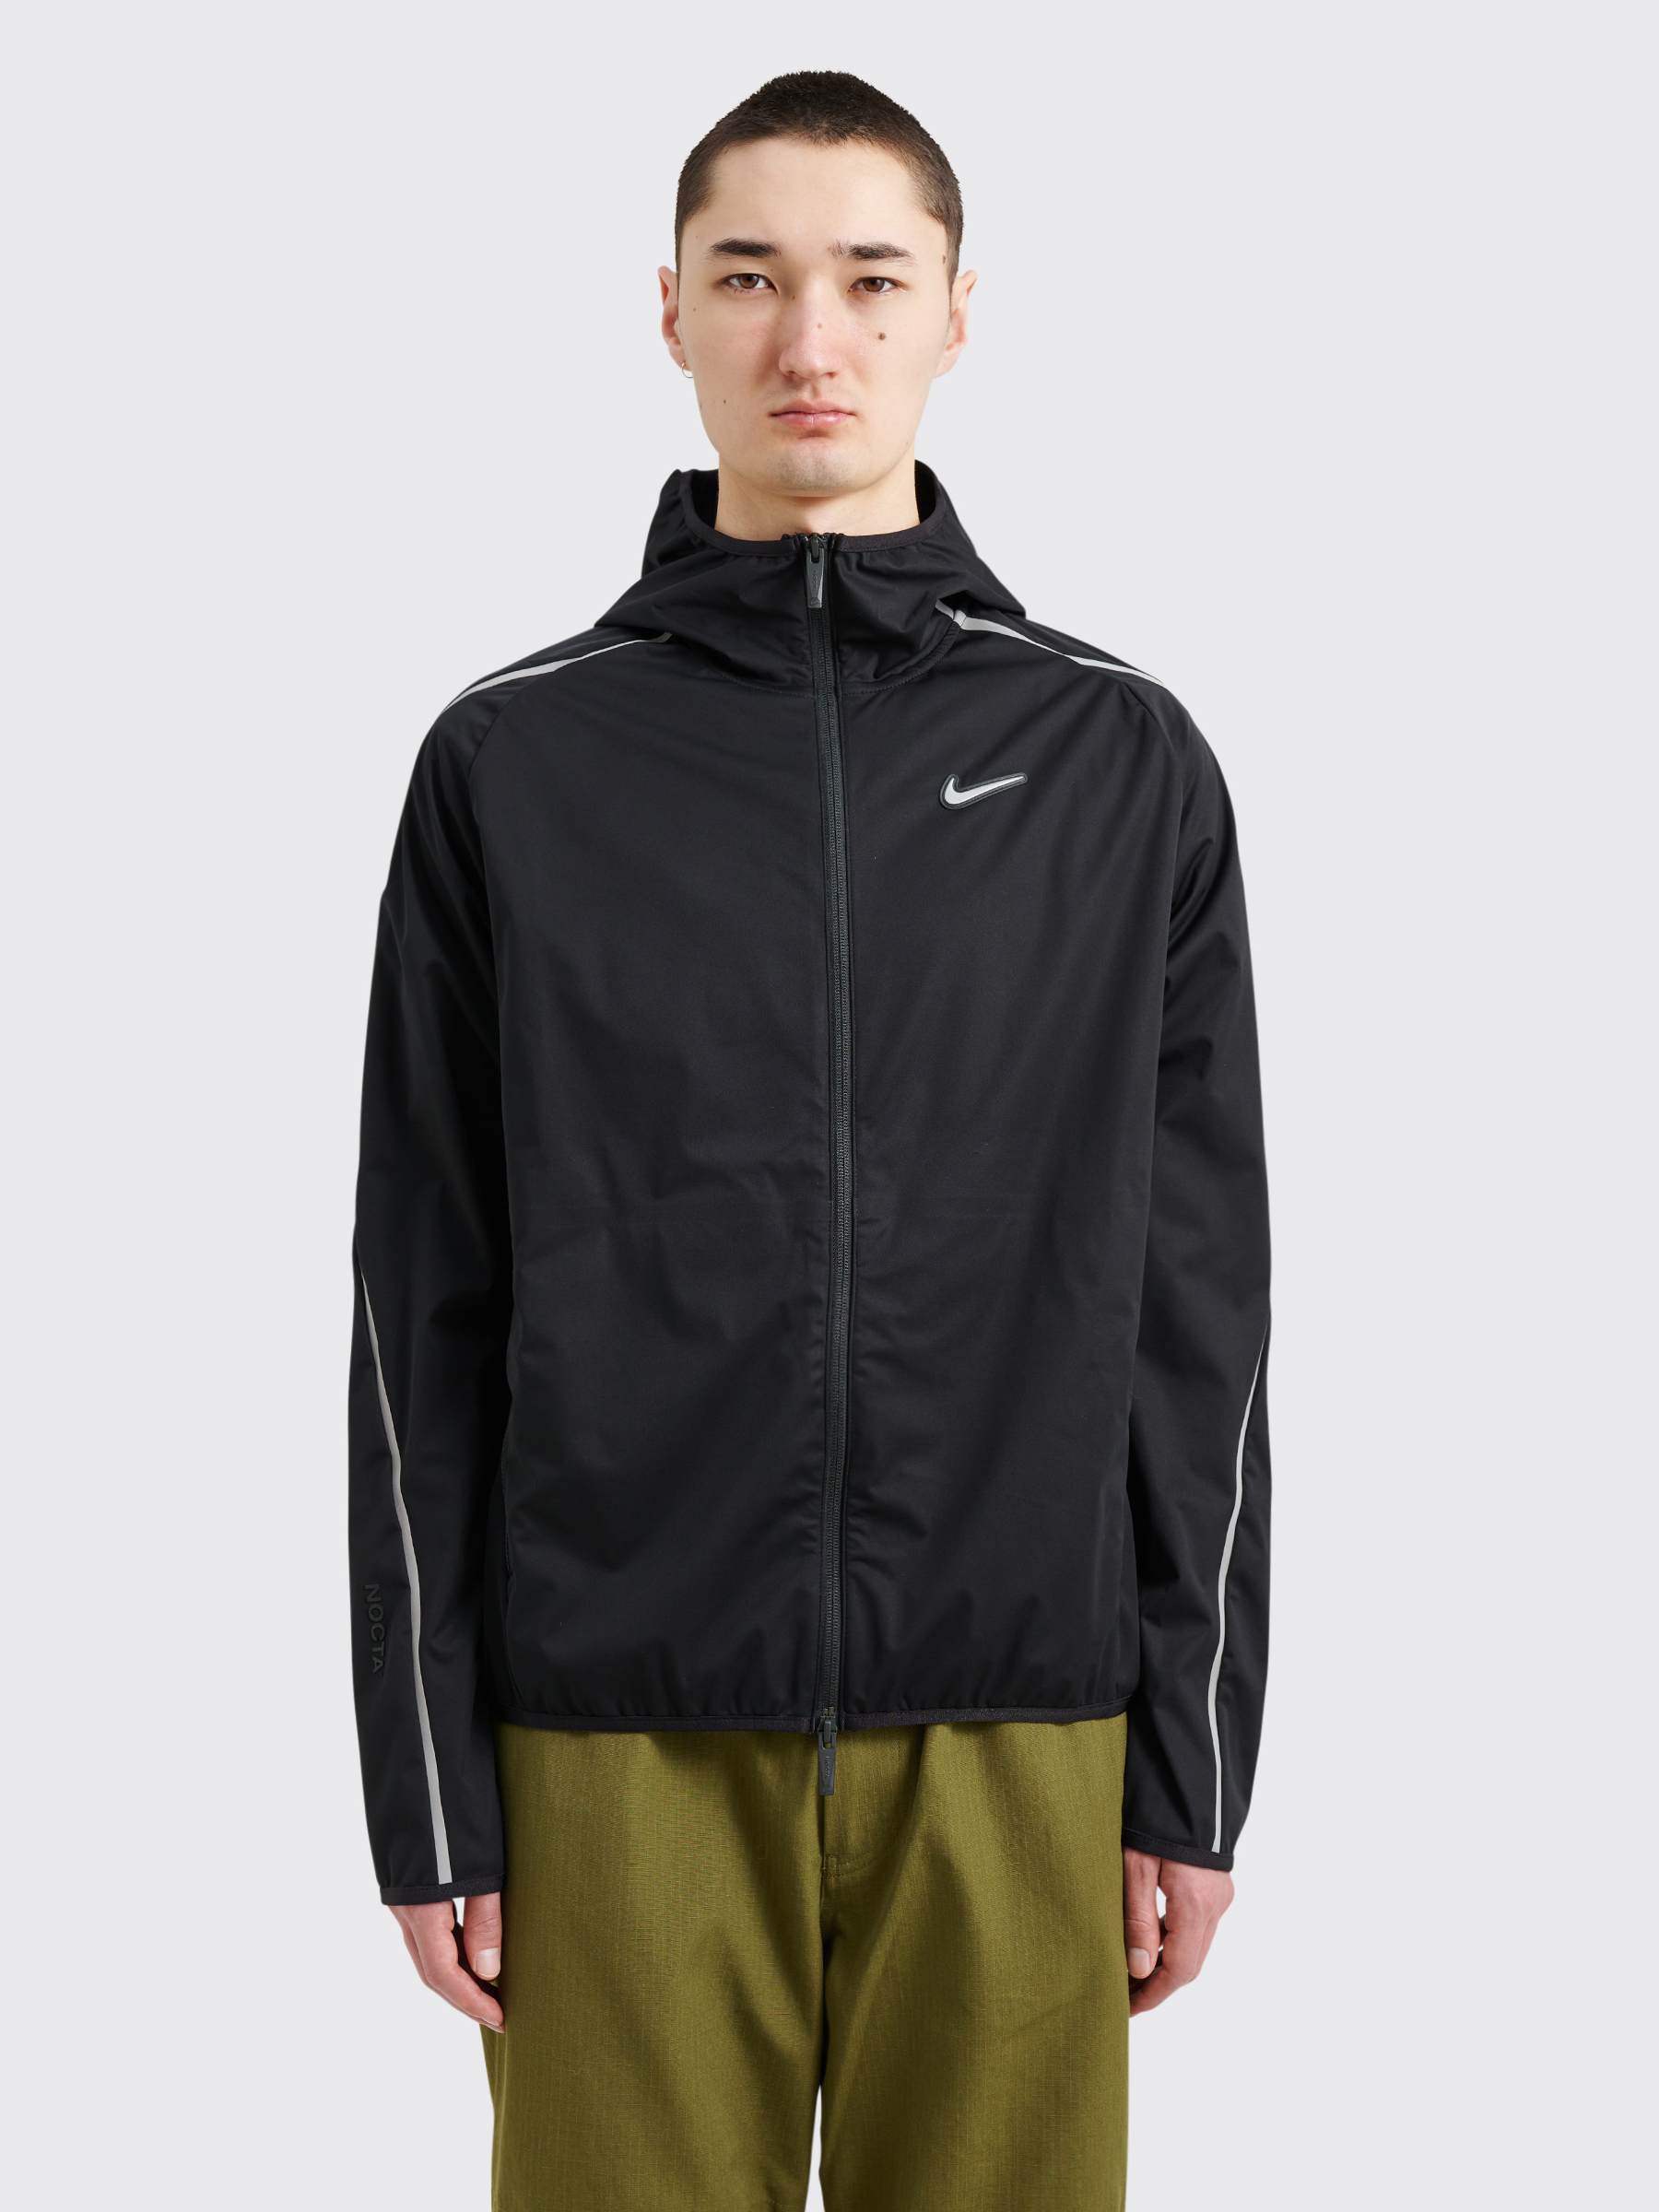 Très Bien - Nike NOCTA Warm-Up Jacket Black